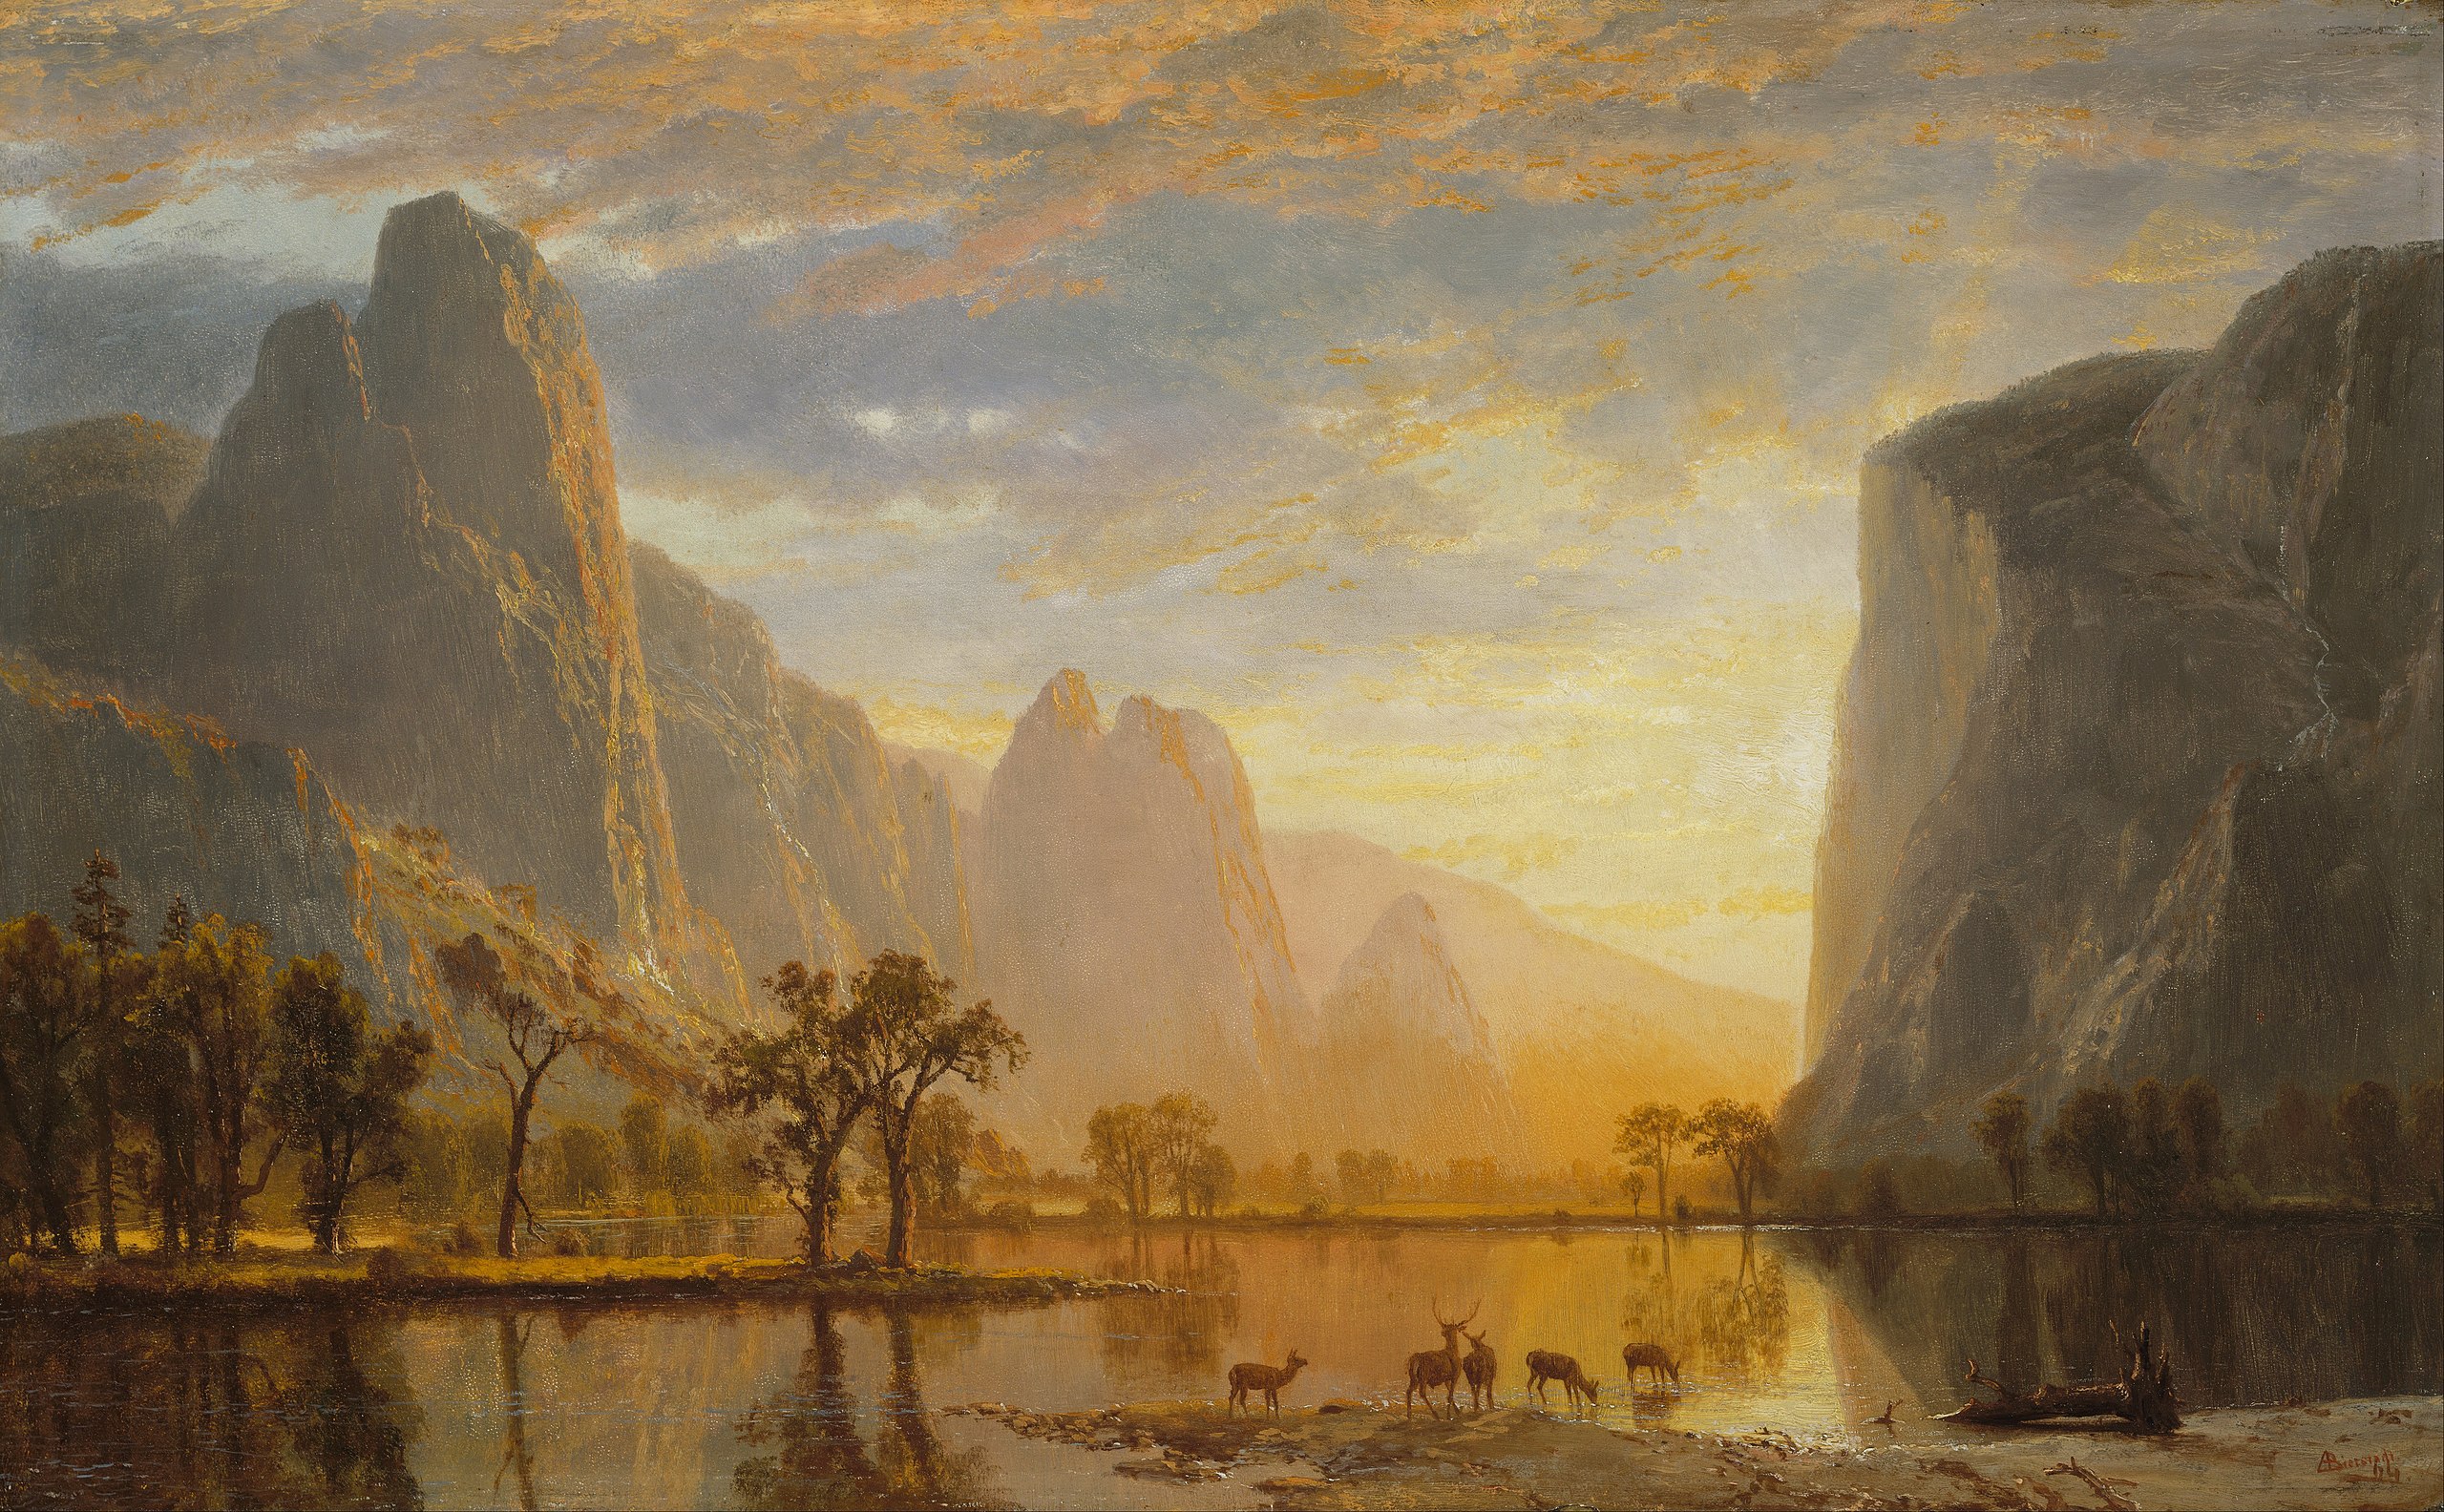 Vale do Yosemite by Albert Bierstadt - 1864 - 30,16 x 48,89 cm 